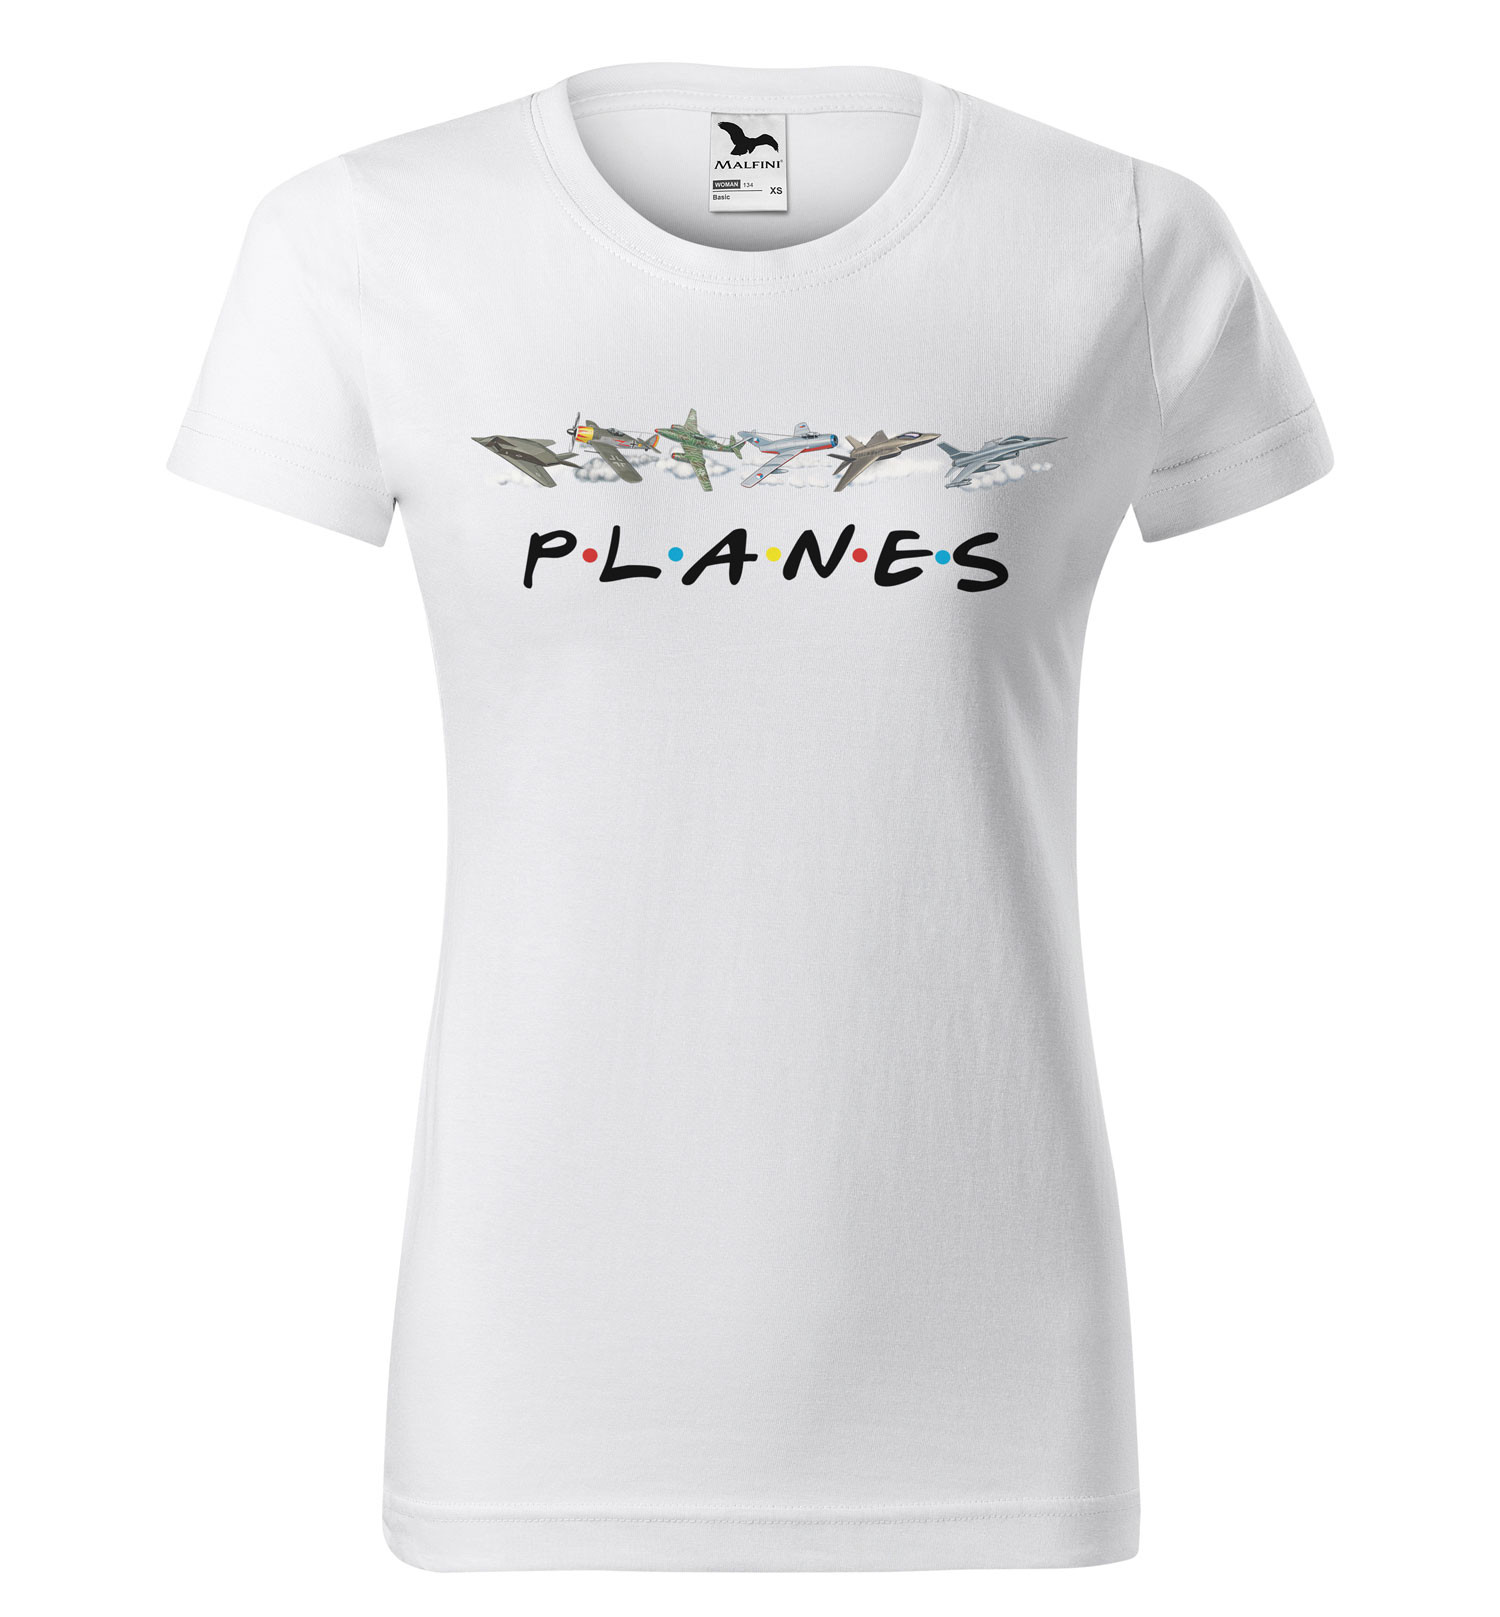 Tričko Planes (Velikost: XL, Typ: pro ženy, Barva trička: Bílá)